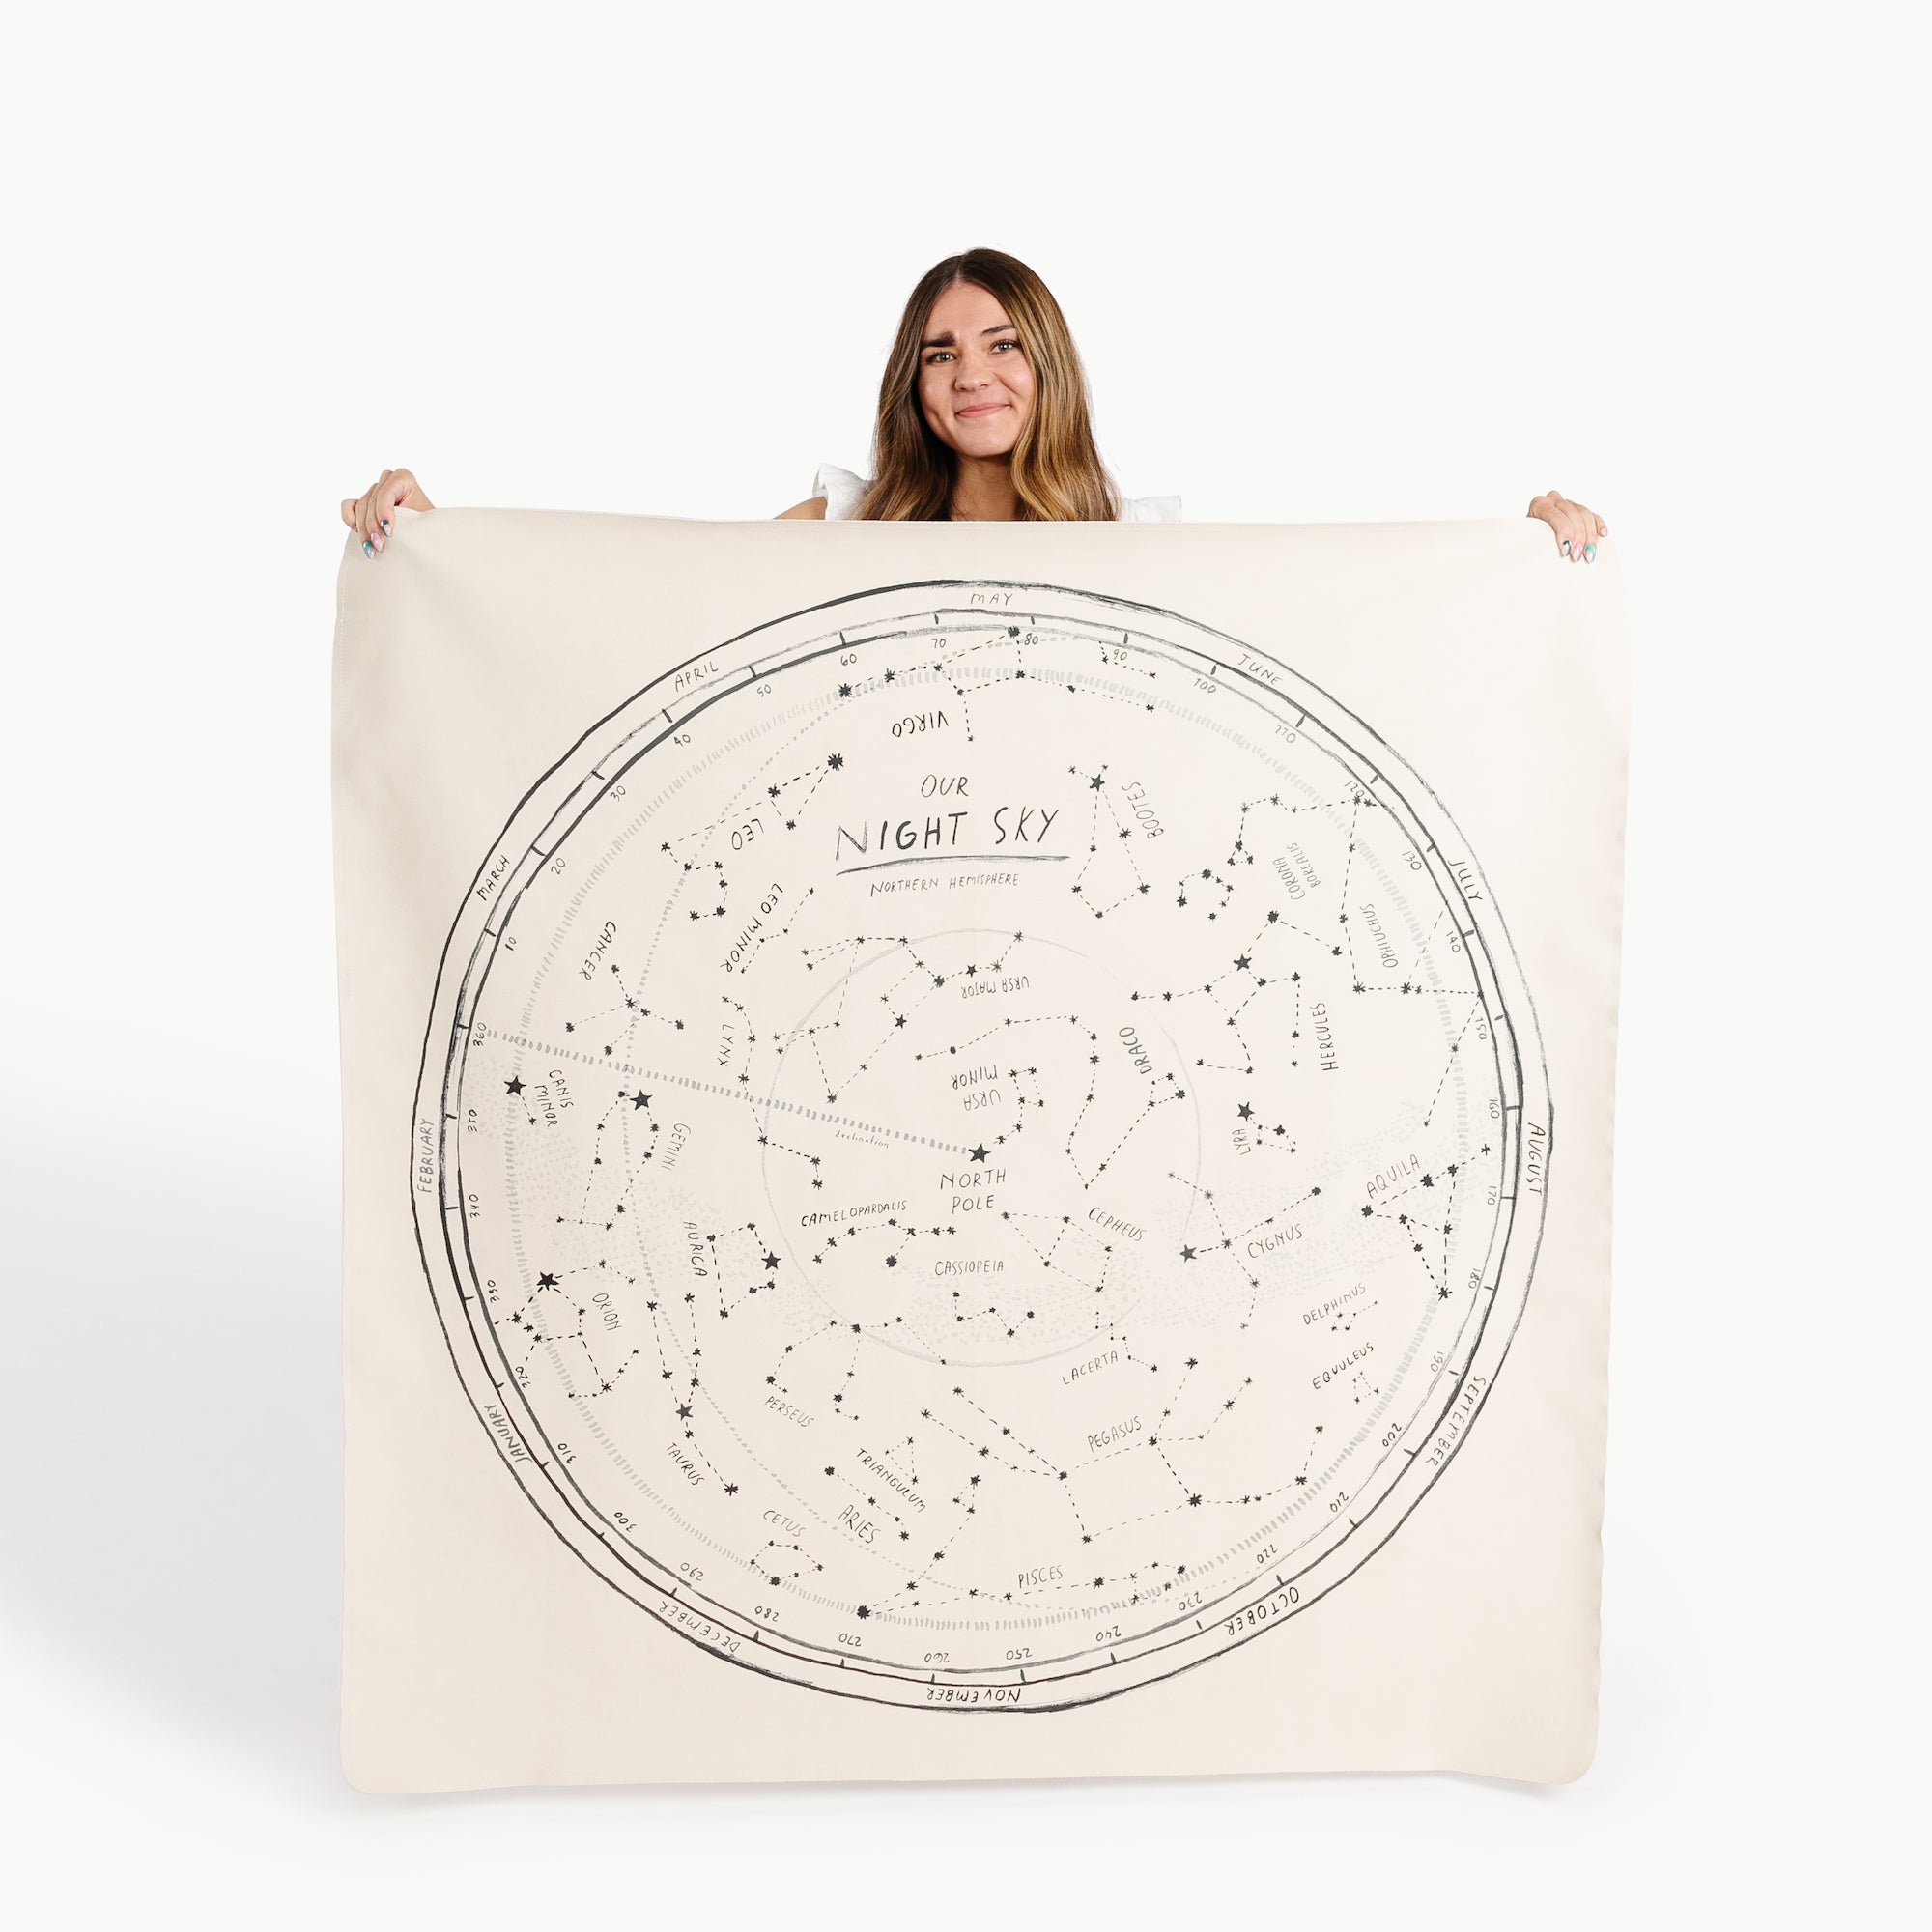 Constellation - Northern Hemisphere (on sale) / Square@woman holding the northern hemisphere constellation mat